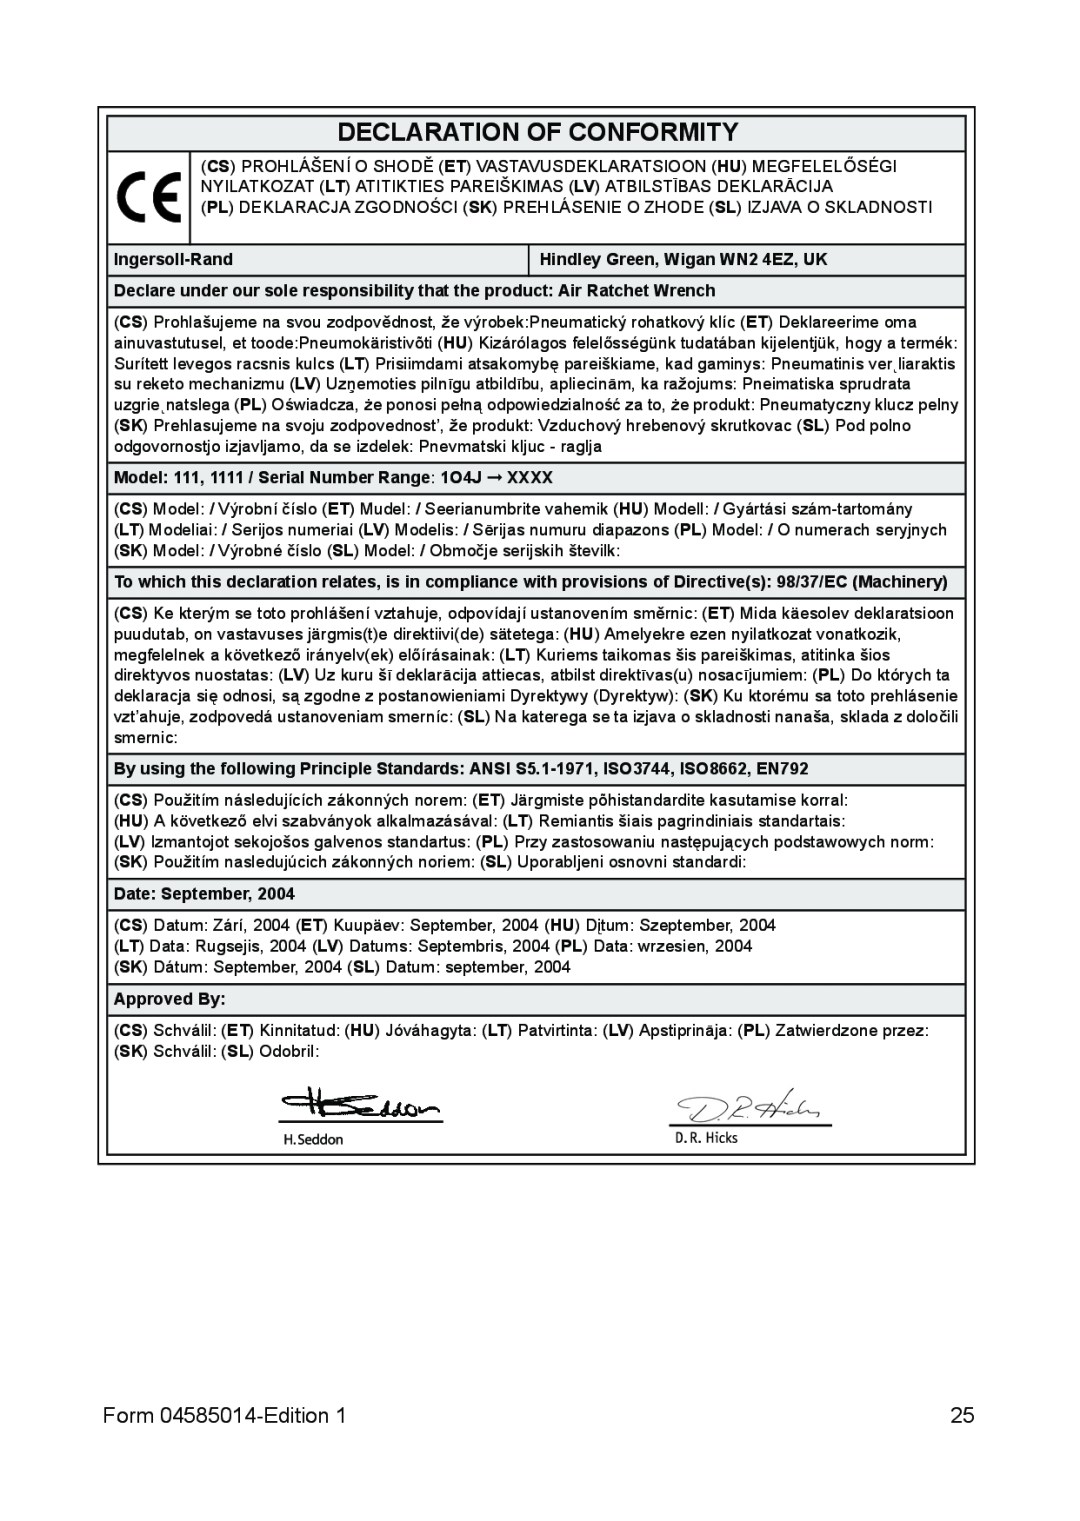 Ingersoll-Rand 111 Declaration Of Conformity, Form 04585014-Edition, Ingersoll-Rand, Hindley Green, Wigan WN2 4EZ, UK 